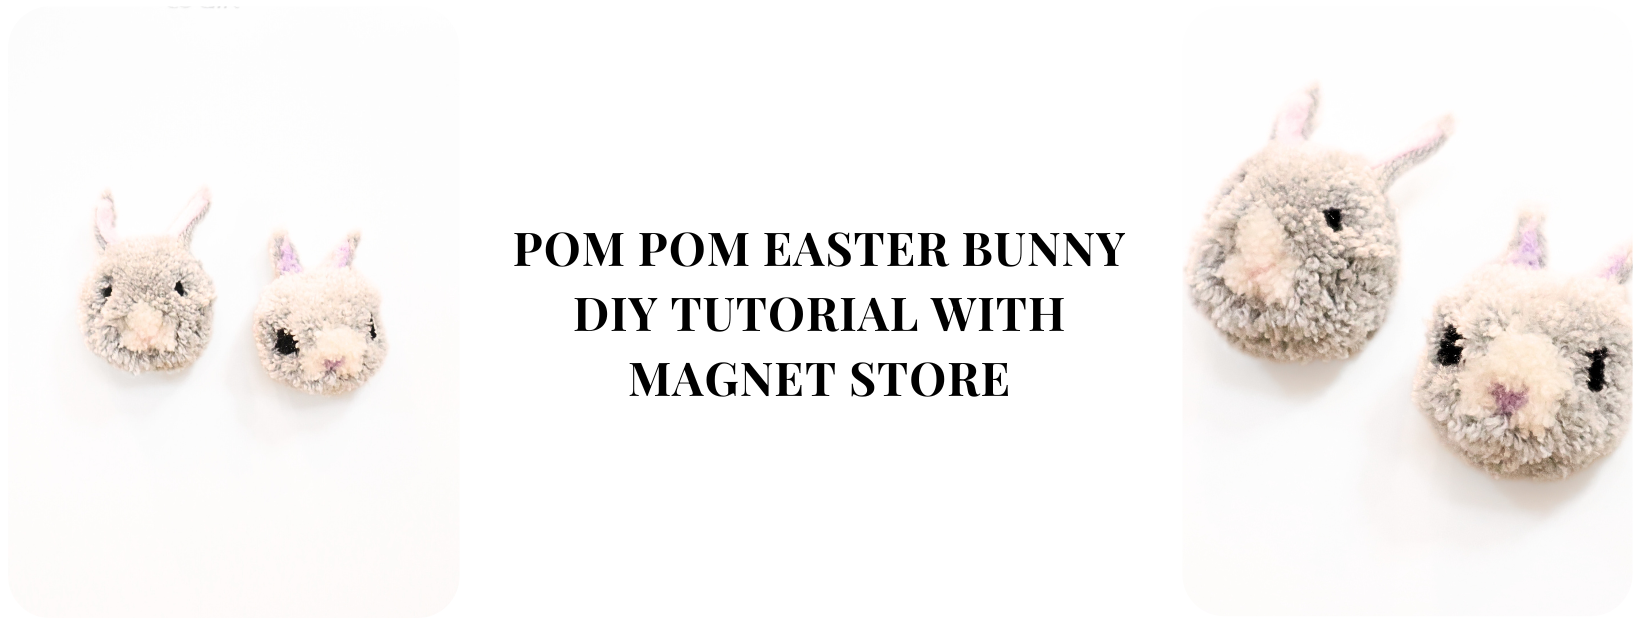 Pom Pom Easter Bunny DIY Tutorial with Magnet Store